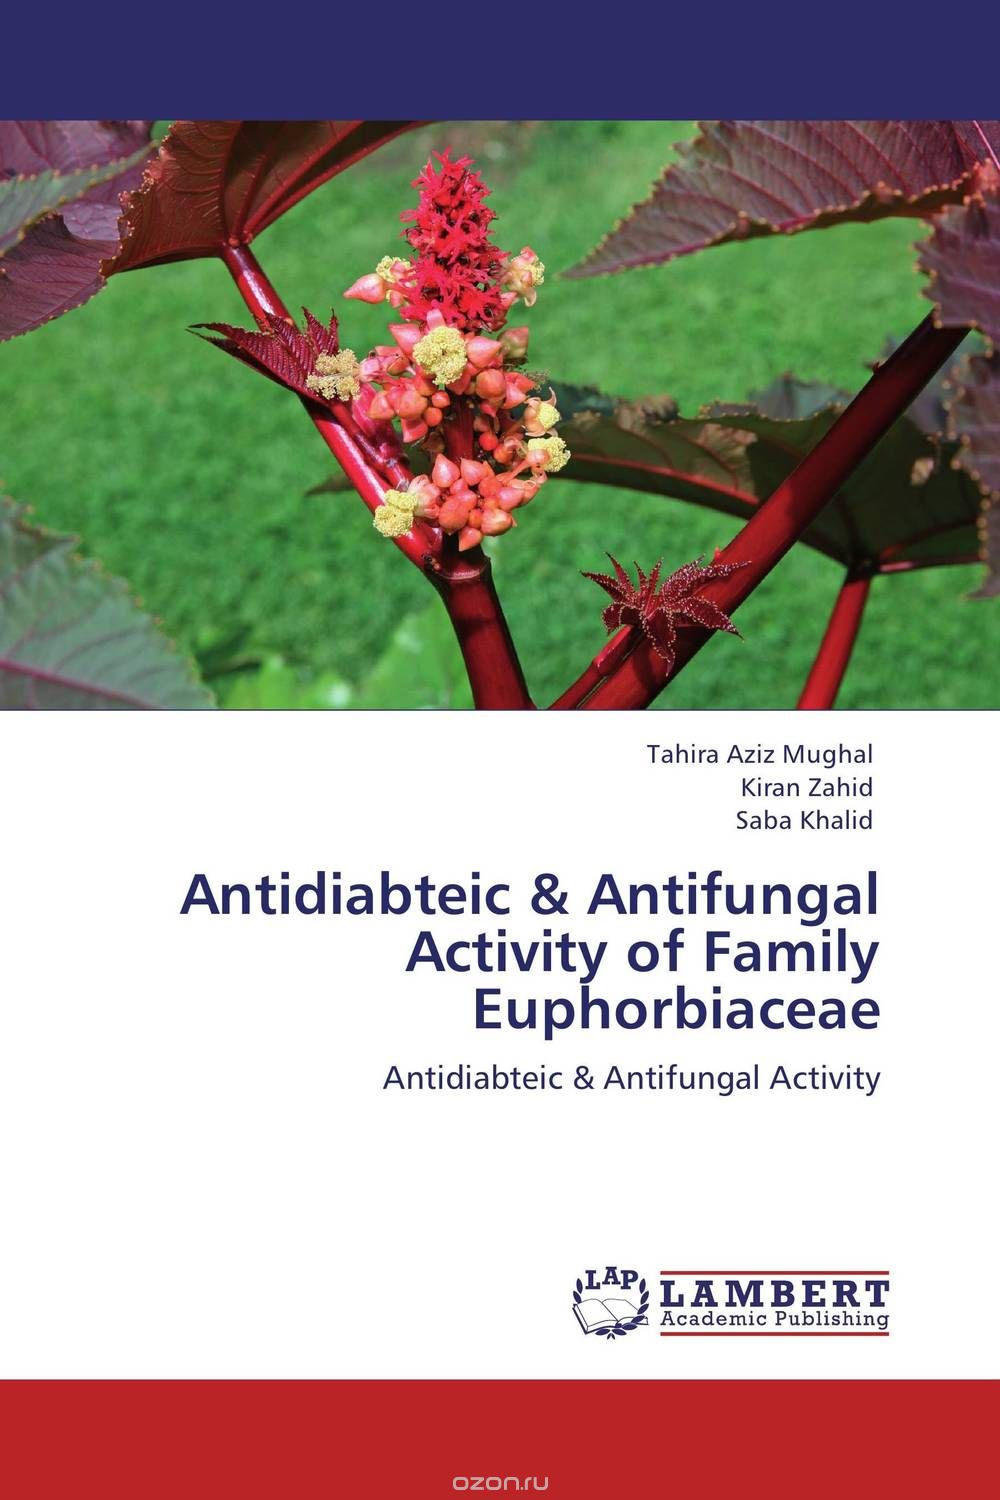 Скачать книгу "Antidiabteic & Antifungal Activity of Family Euphorbiaceae"